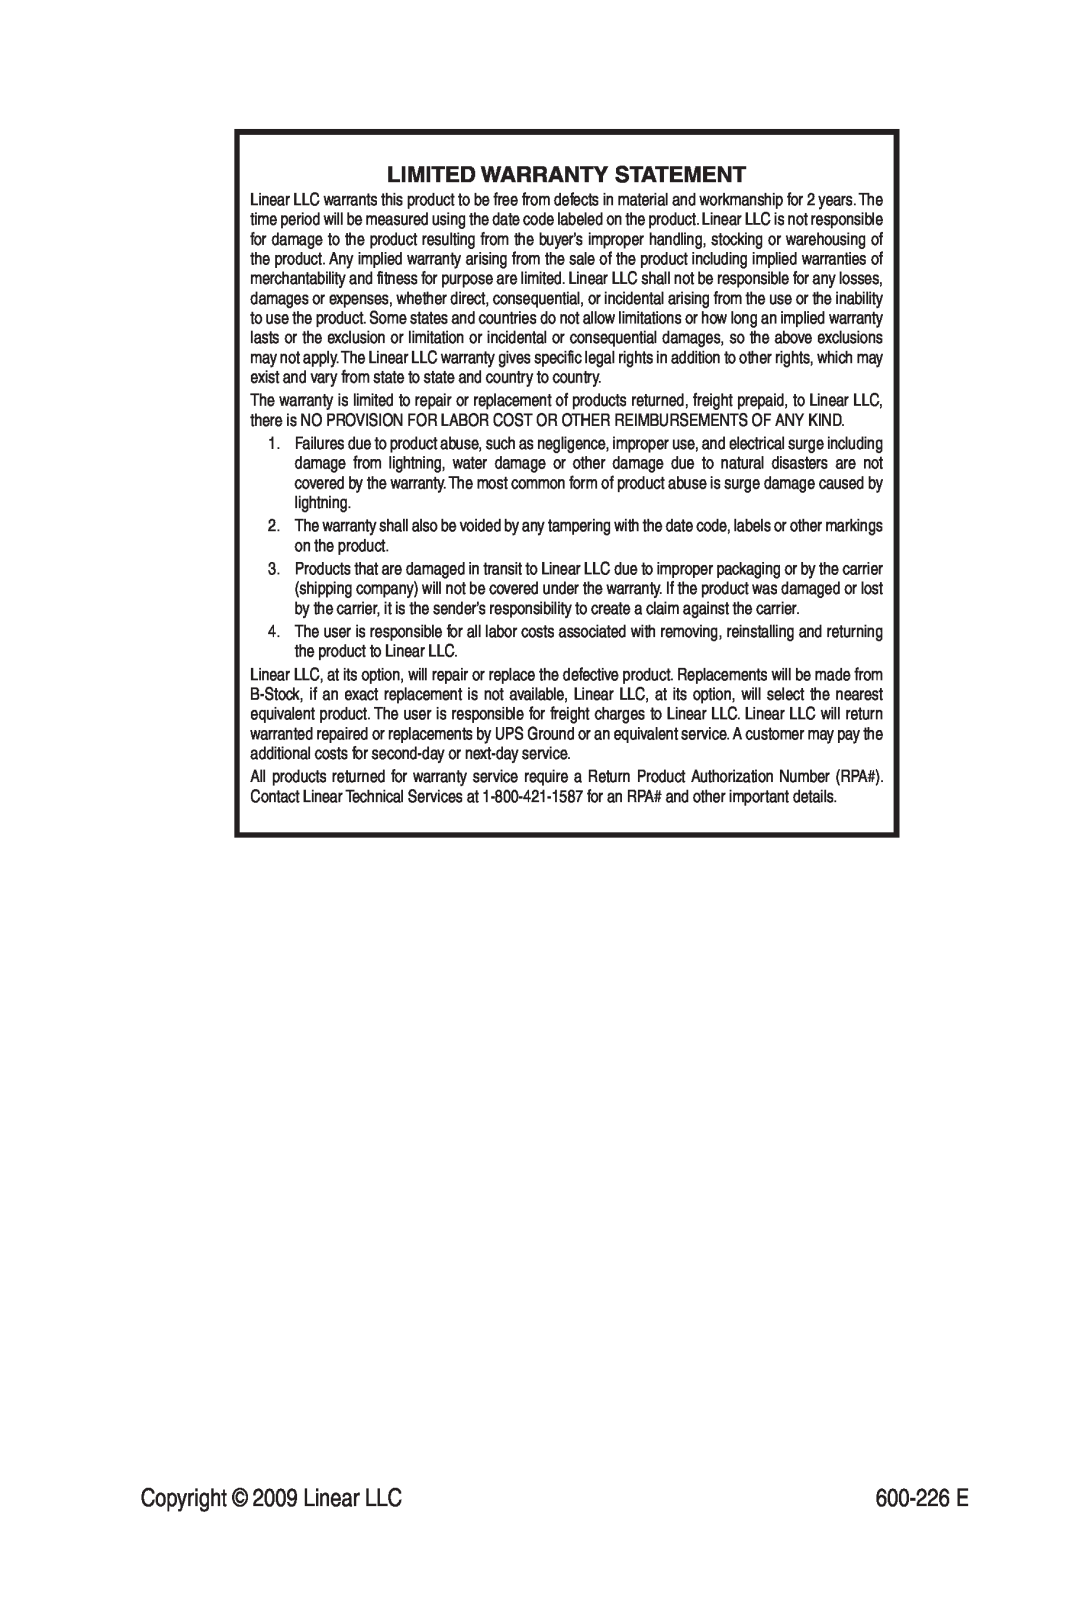 Linear 5515 manual Copyright 2009 Linear LLC, Limited Warranty Statement, 600-226 E 